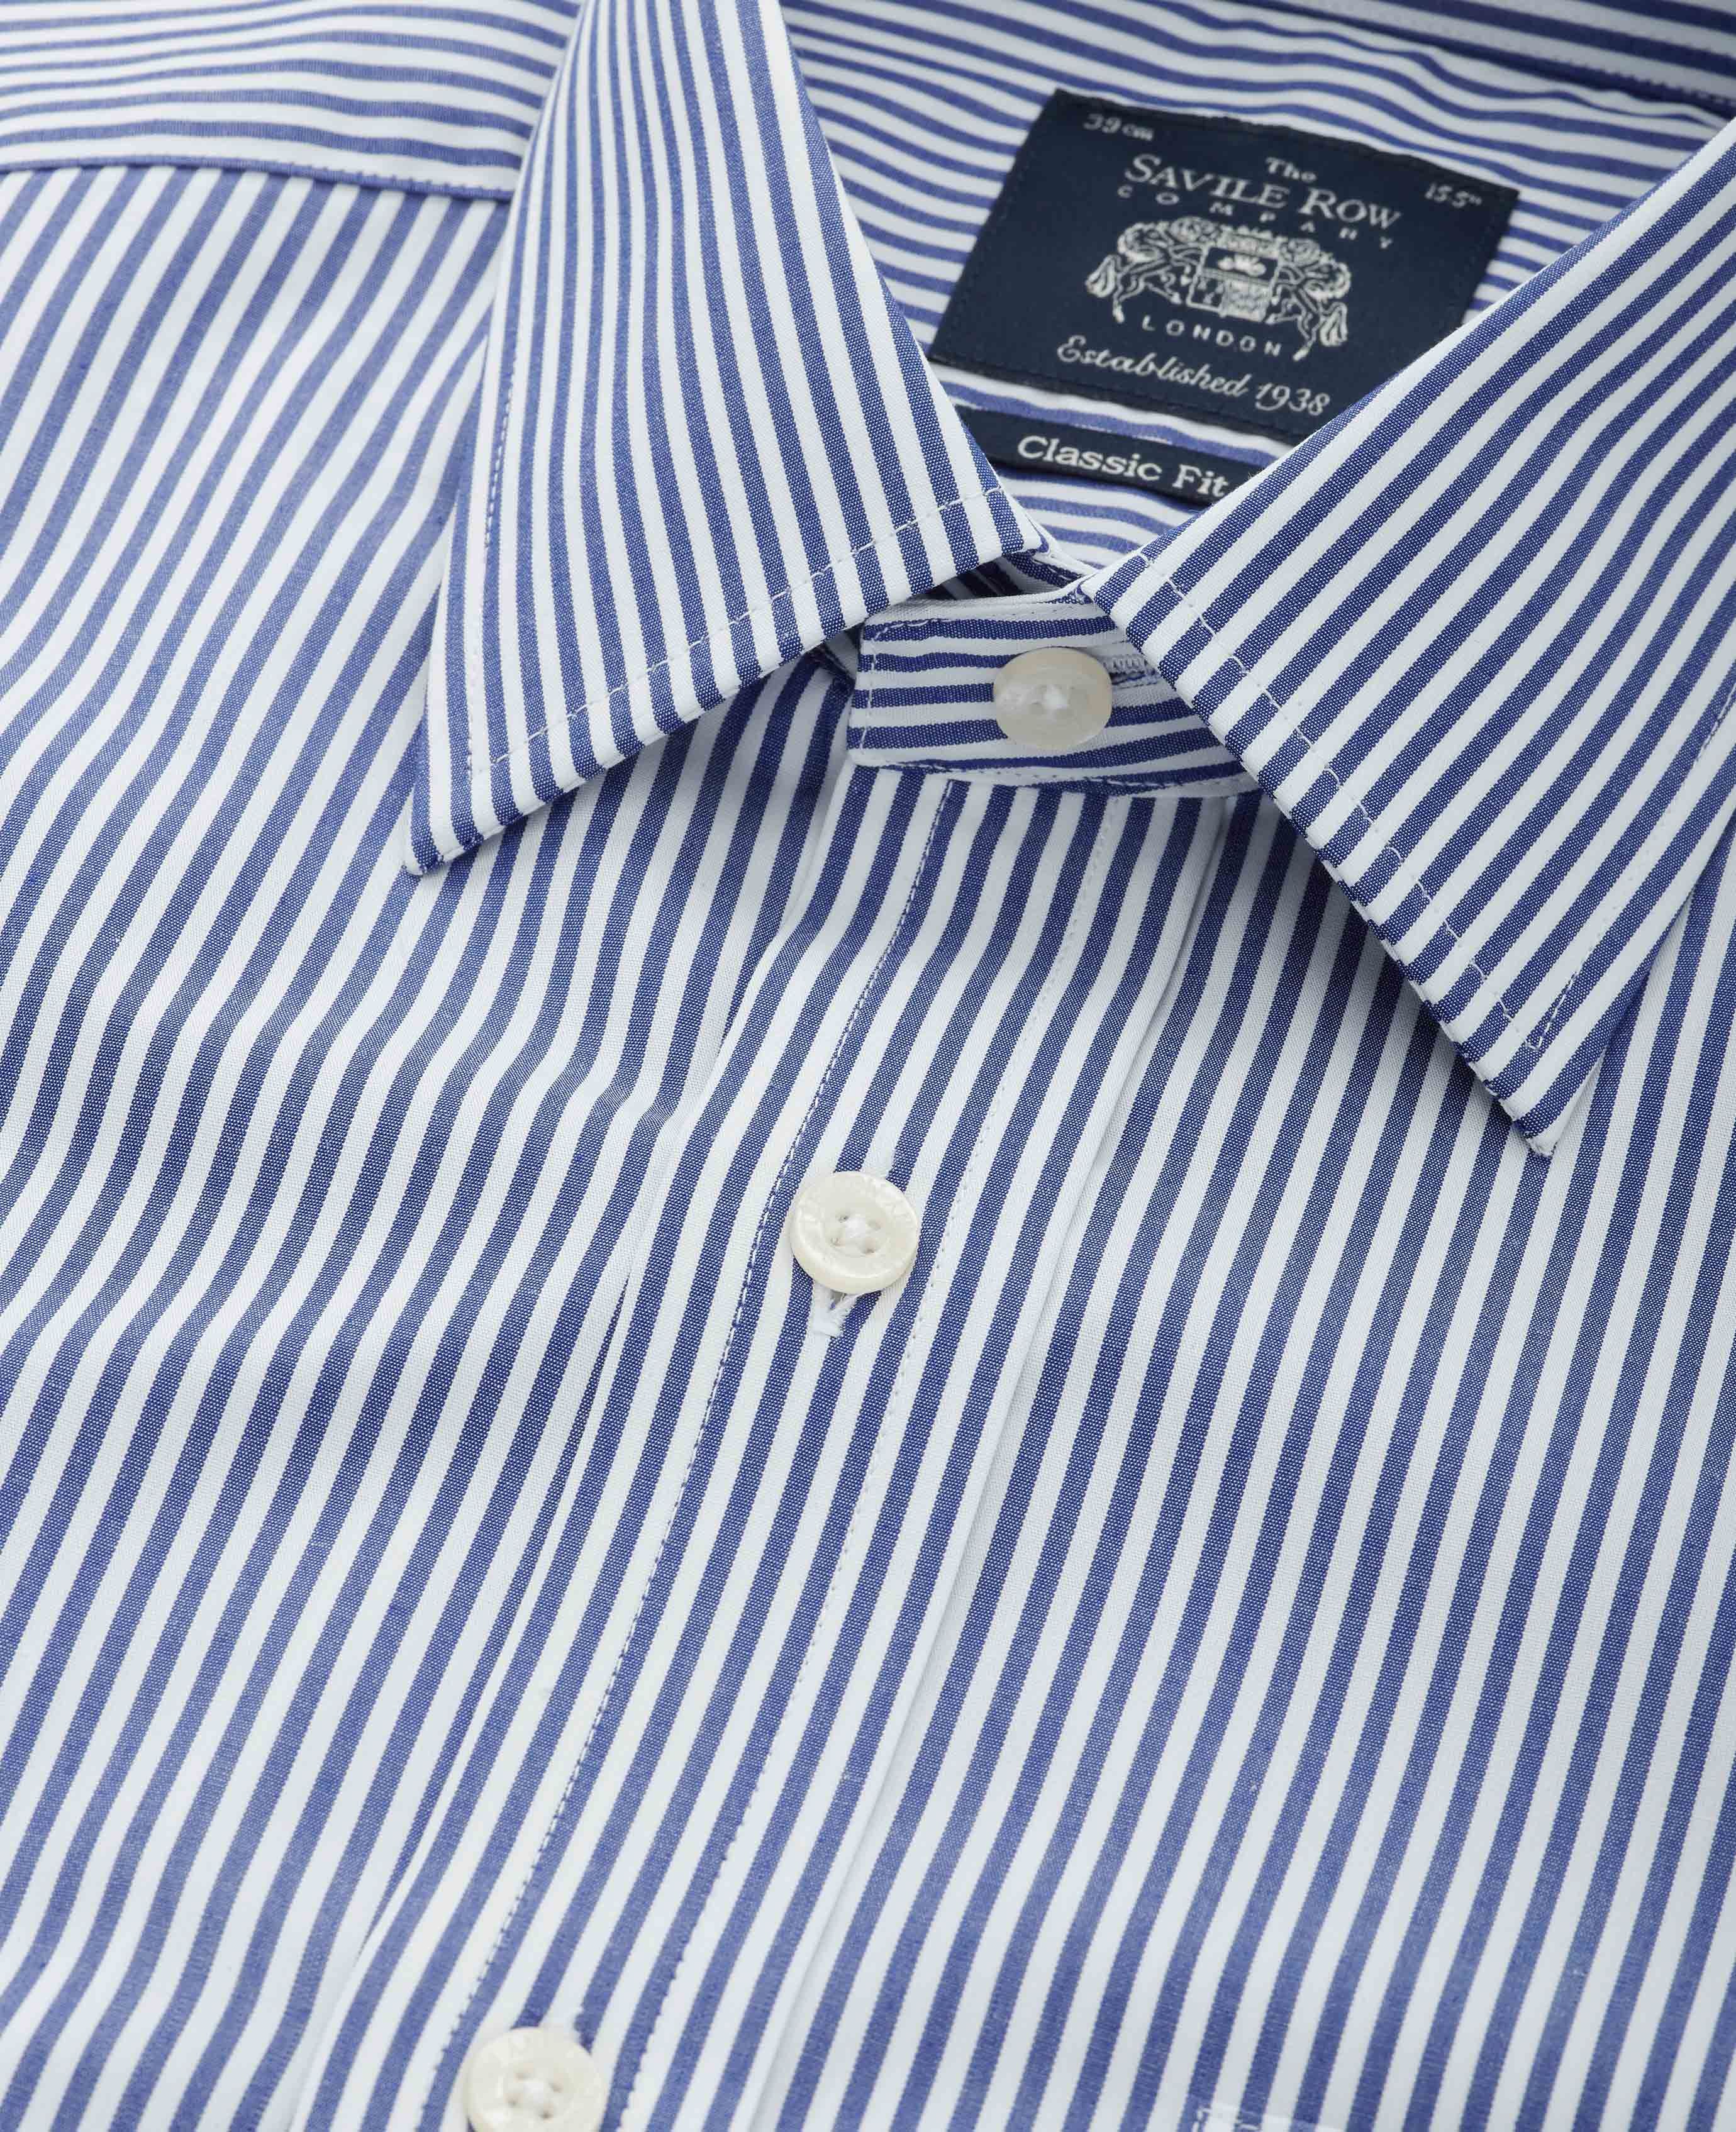 Men’s White Navy Bengal Stripe Classic Fit Shirt | Savile Row Co